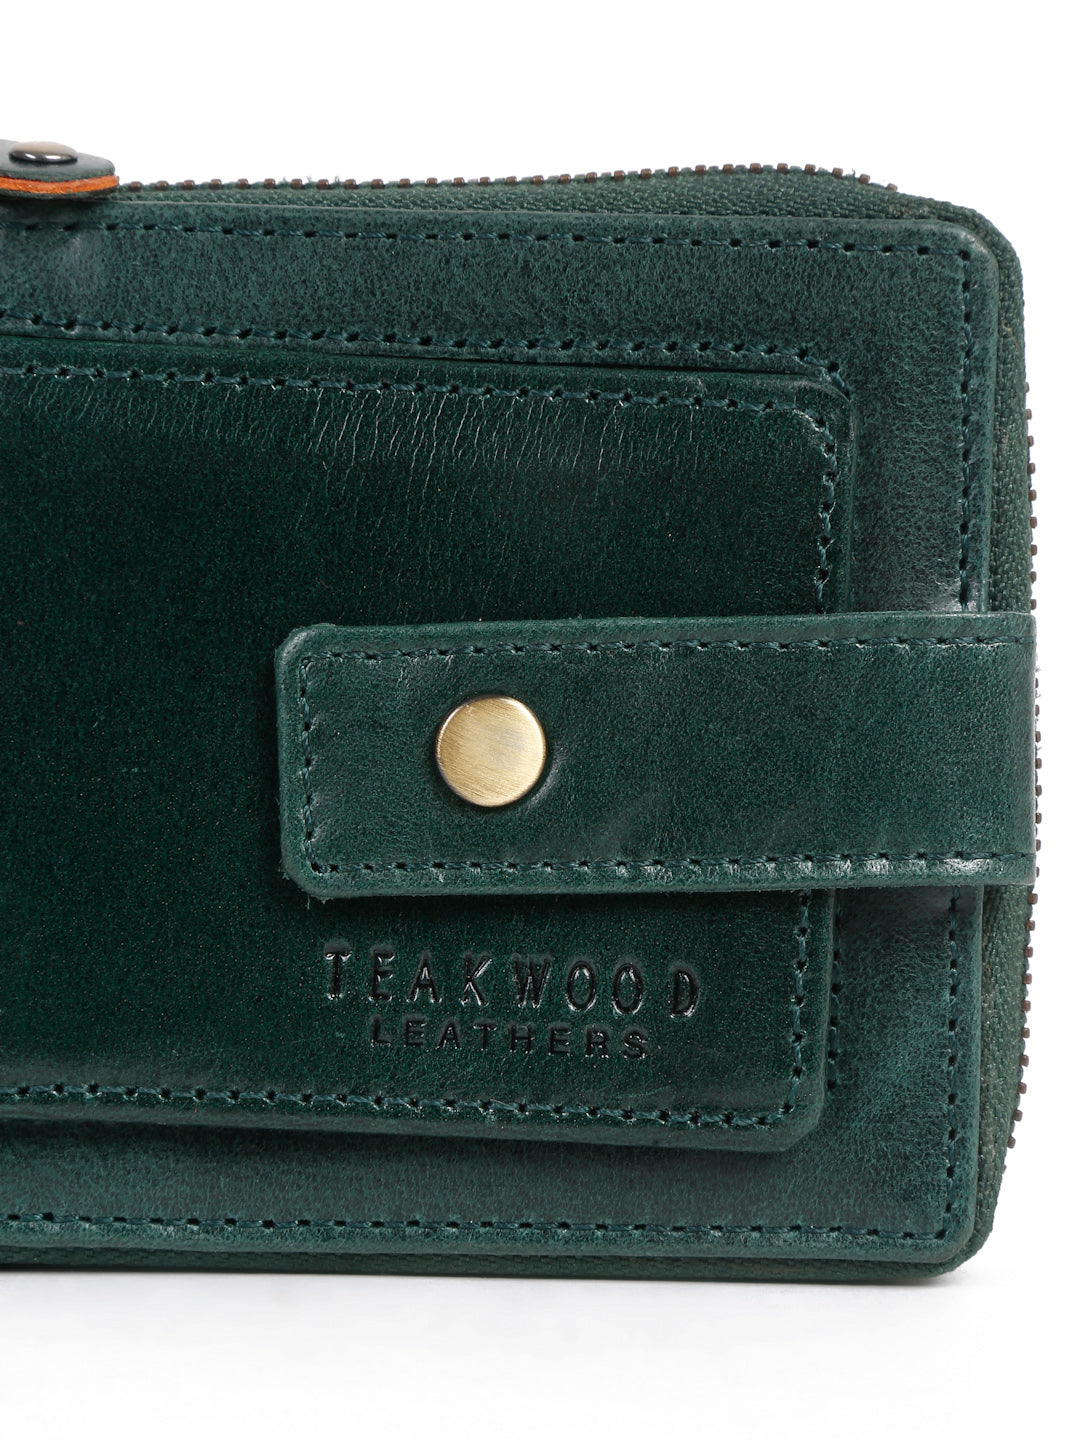 Handmade green leather wallet - Indianleathercraft